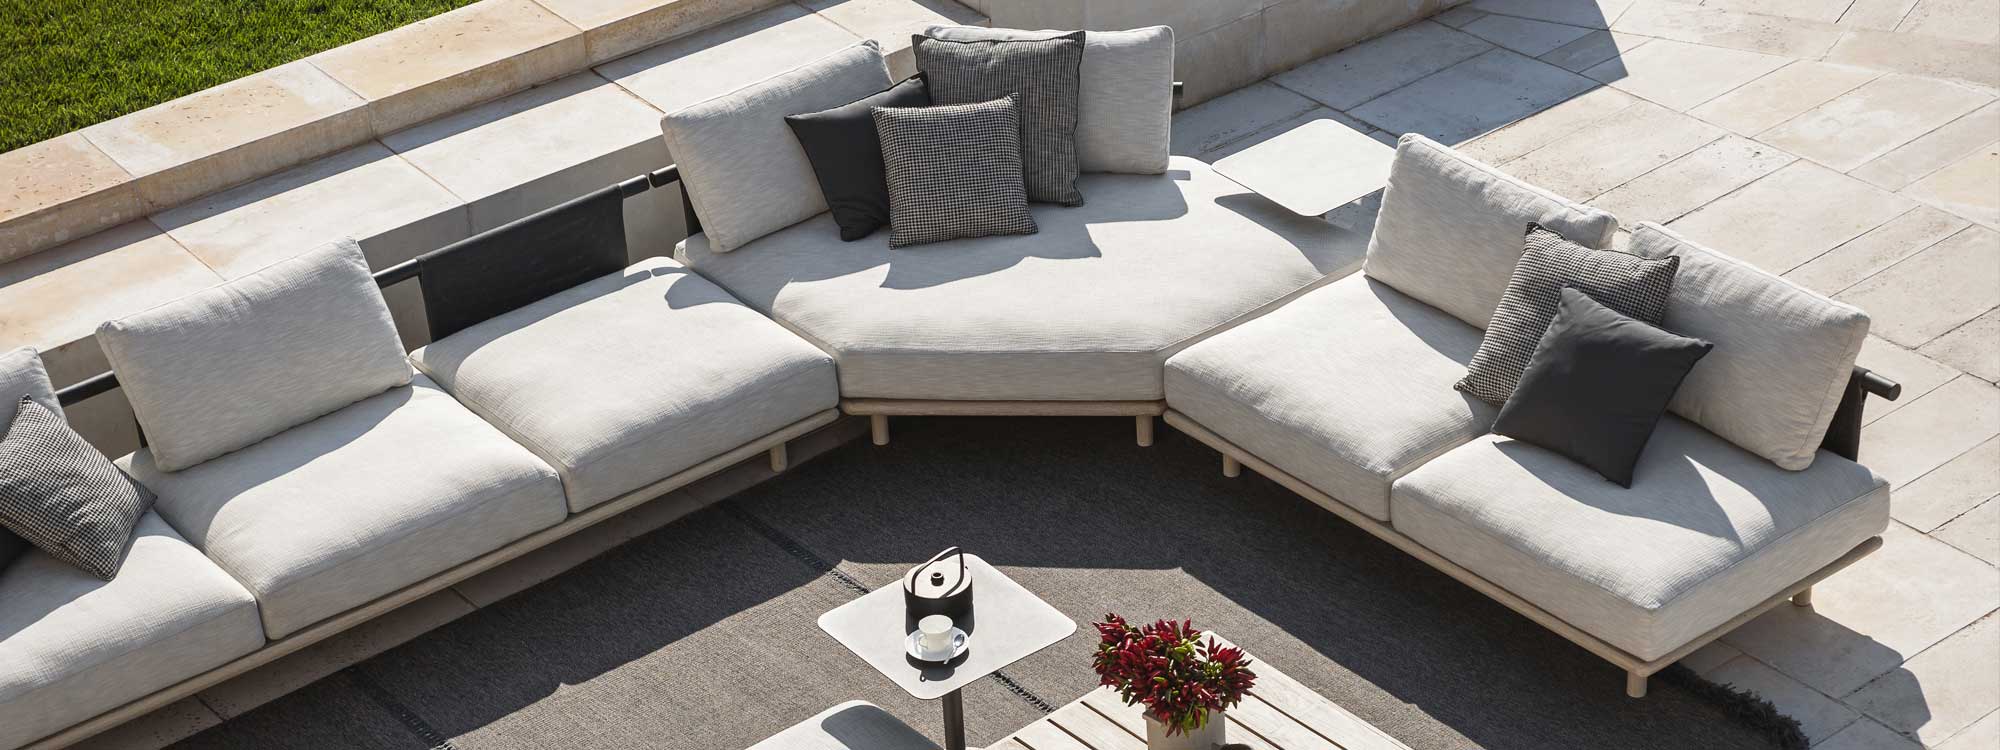 Eden modular garden sofa by Rodolfo Dordoni for Roda Italian outdoor furniture company